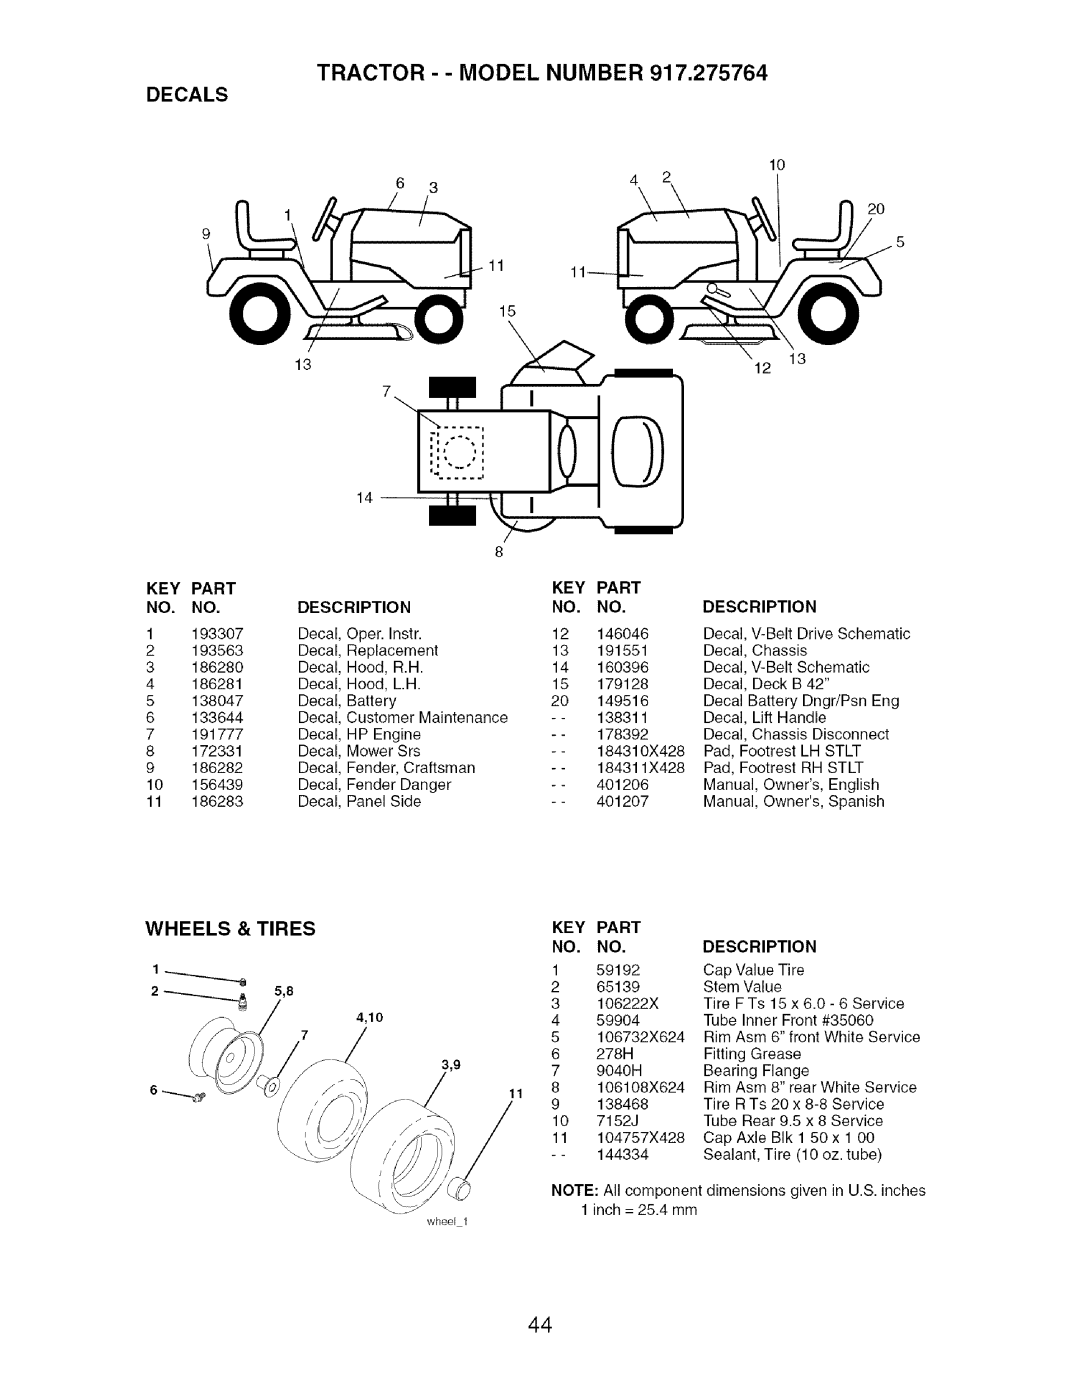 Craftsman 917.275764 owner manual Decals, Description, Wheels & Tires 